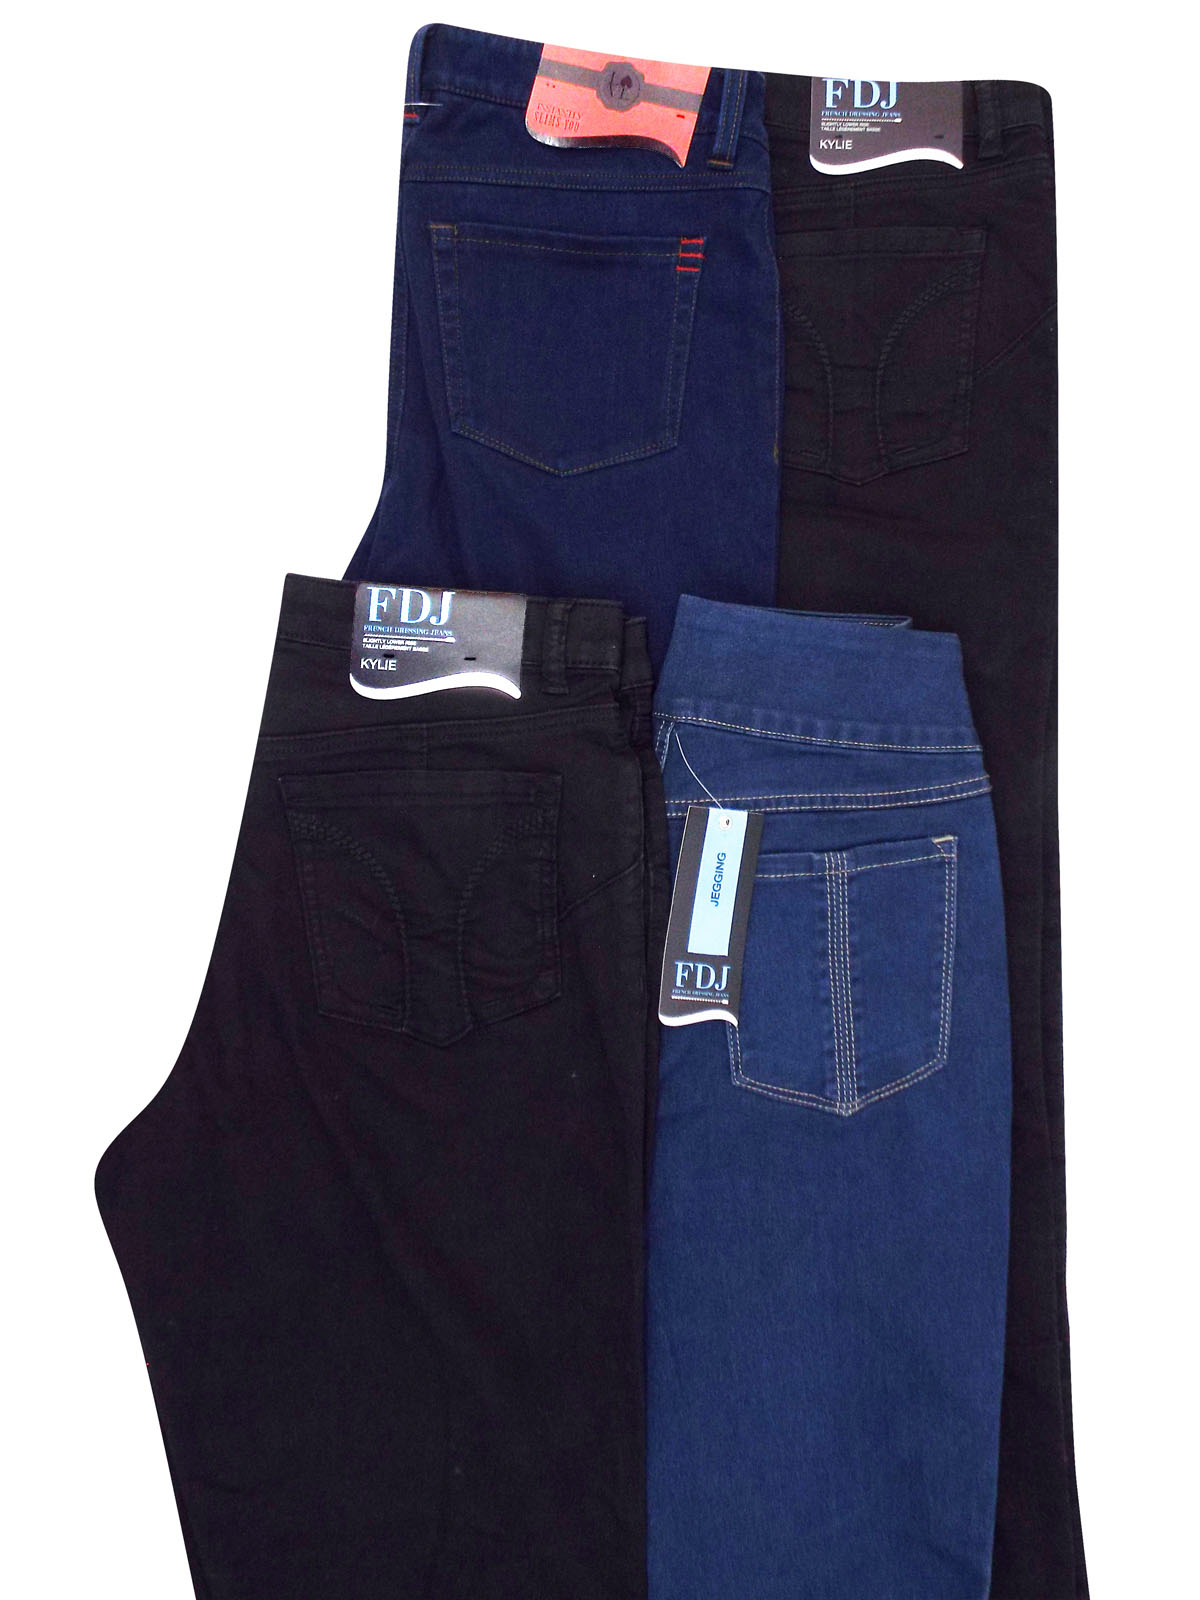 FDJ - - ASSORTED Ladies Denim Jeans - Size 8 to 12